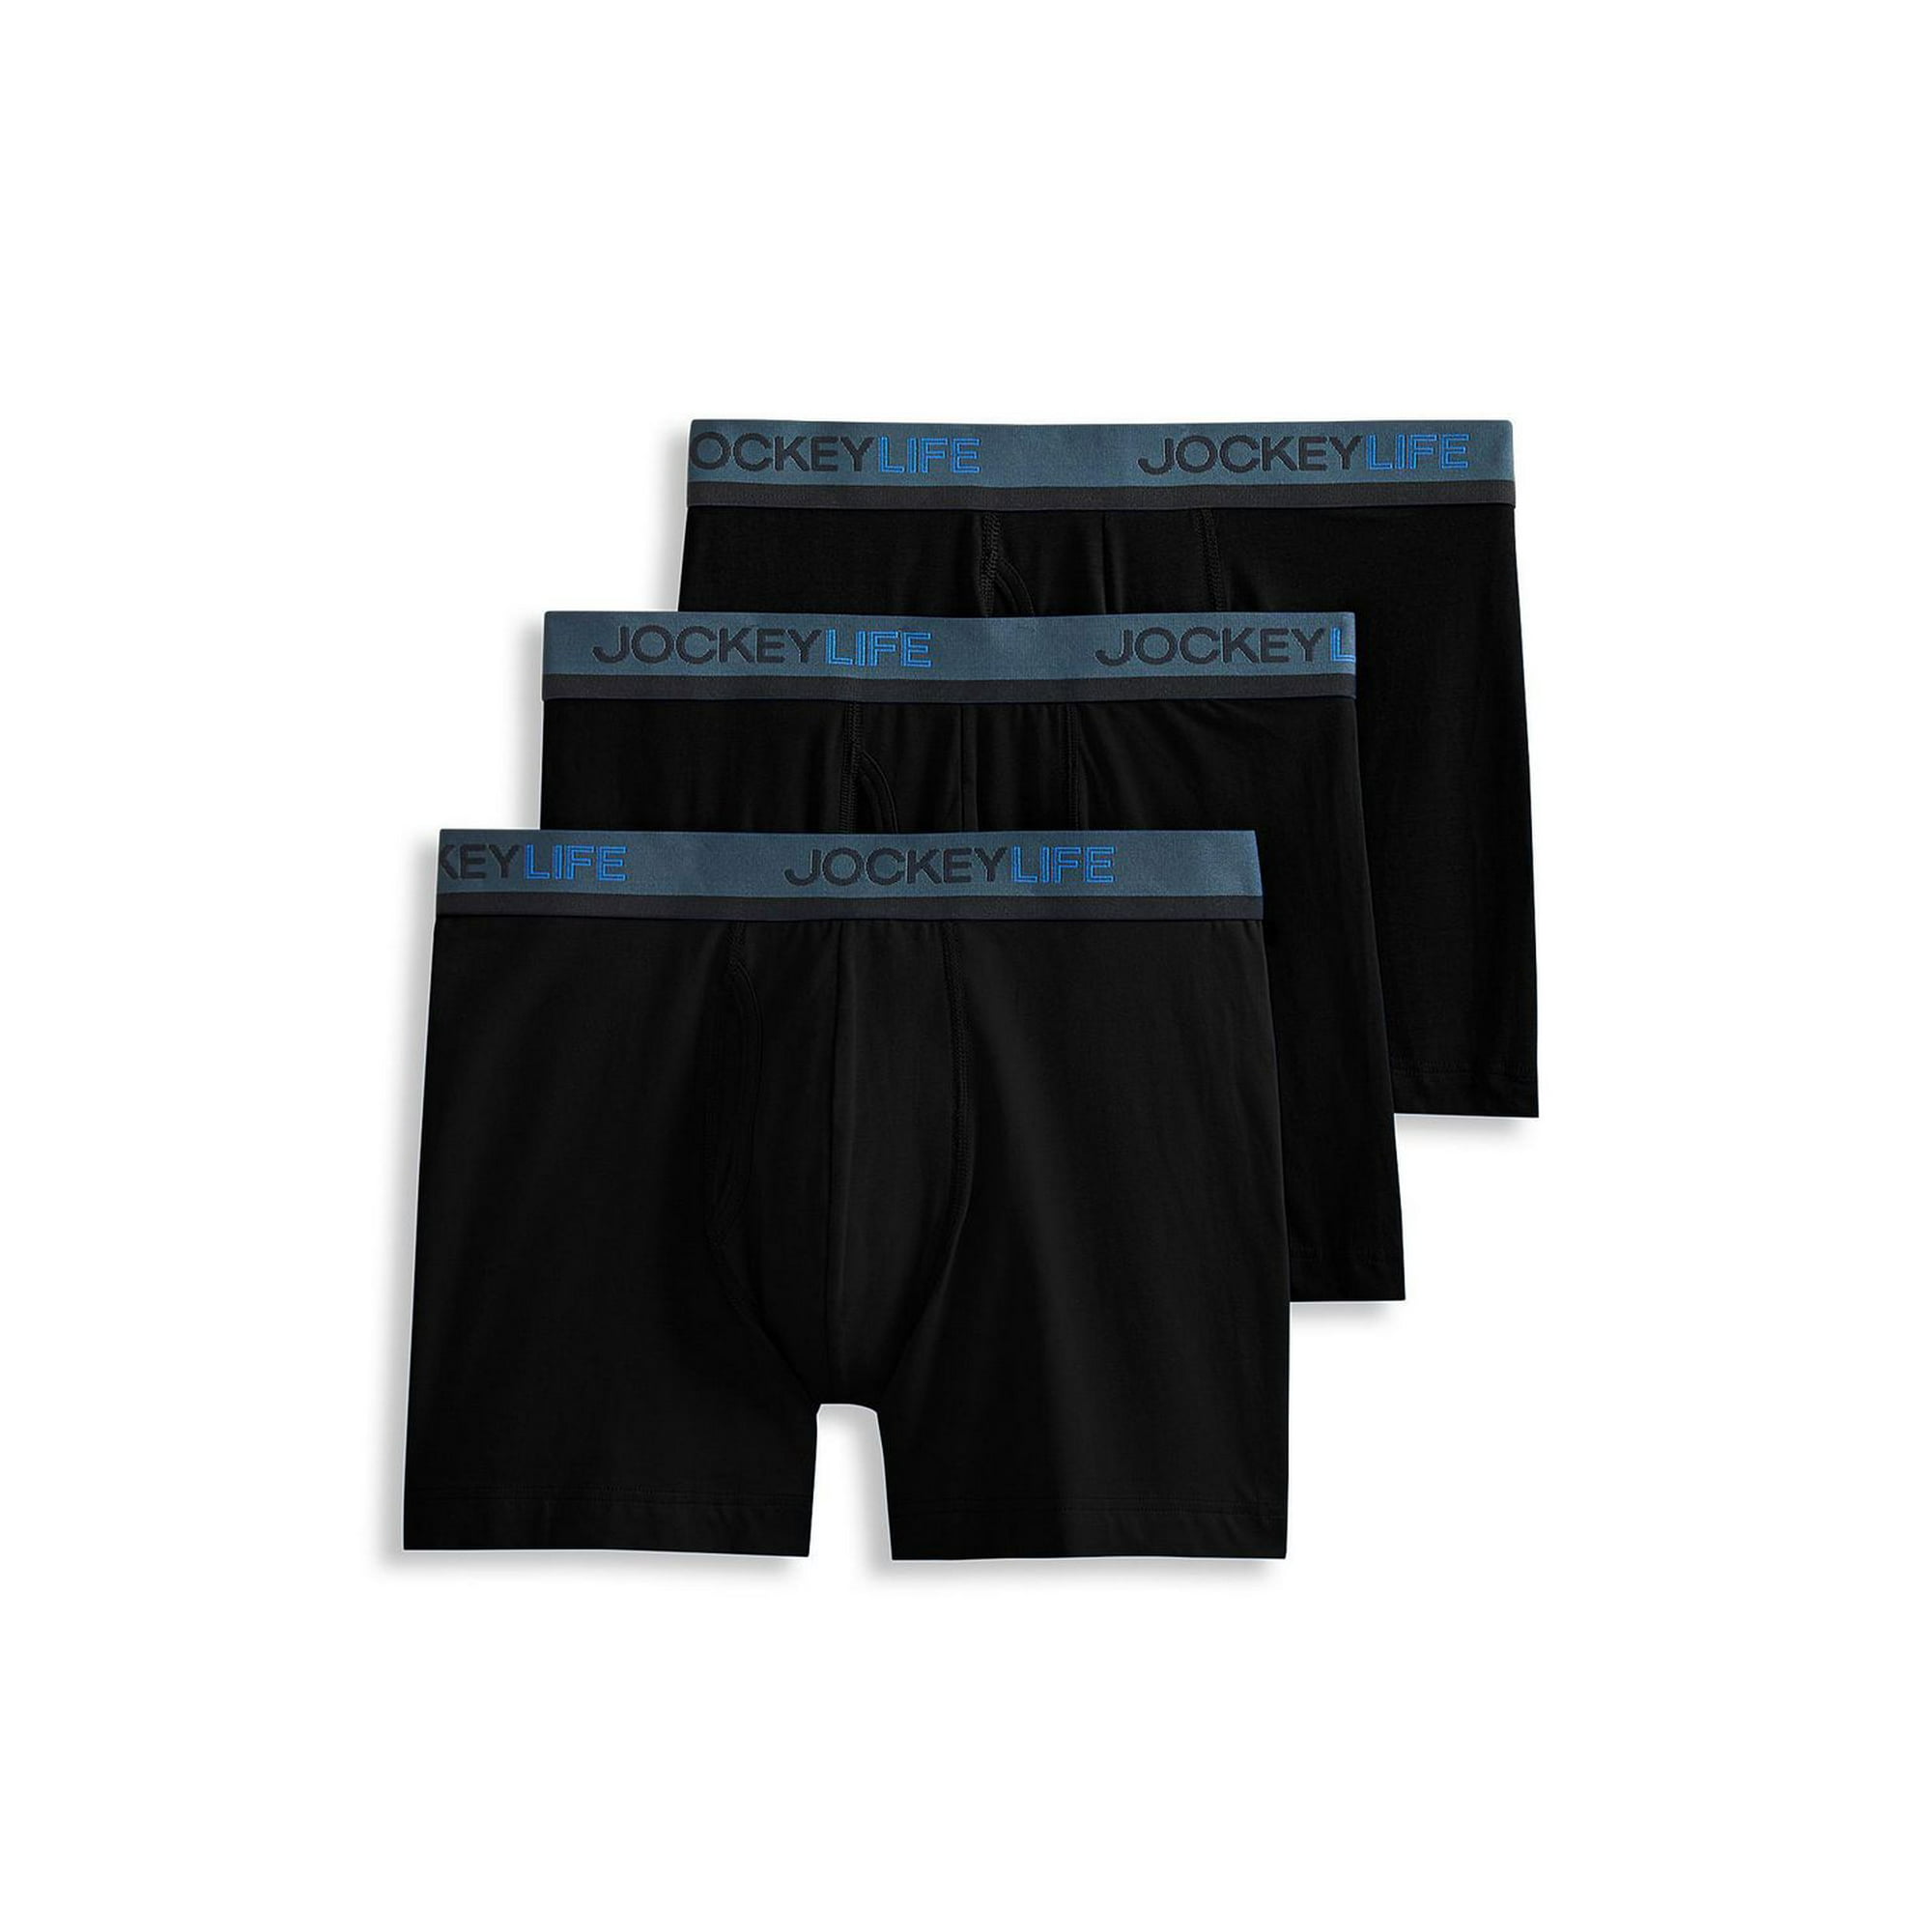 Jockey Life Mens Underwear Boxer Briefs FOR SALE! - PicClick